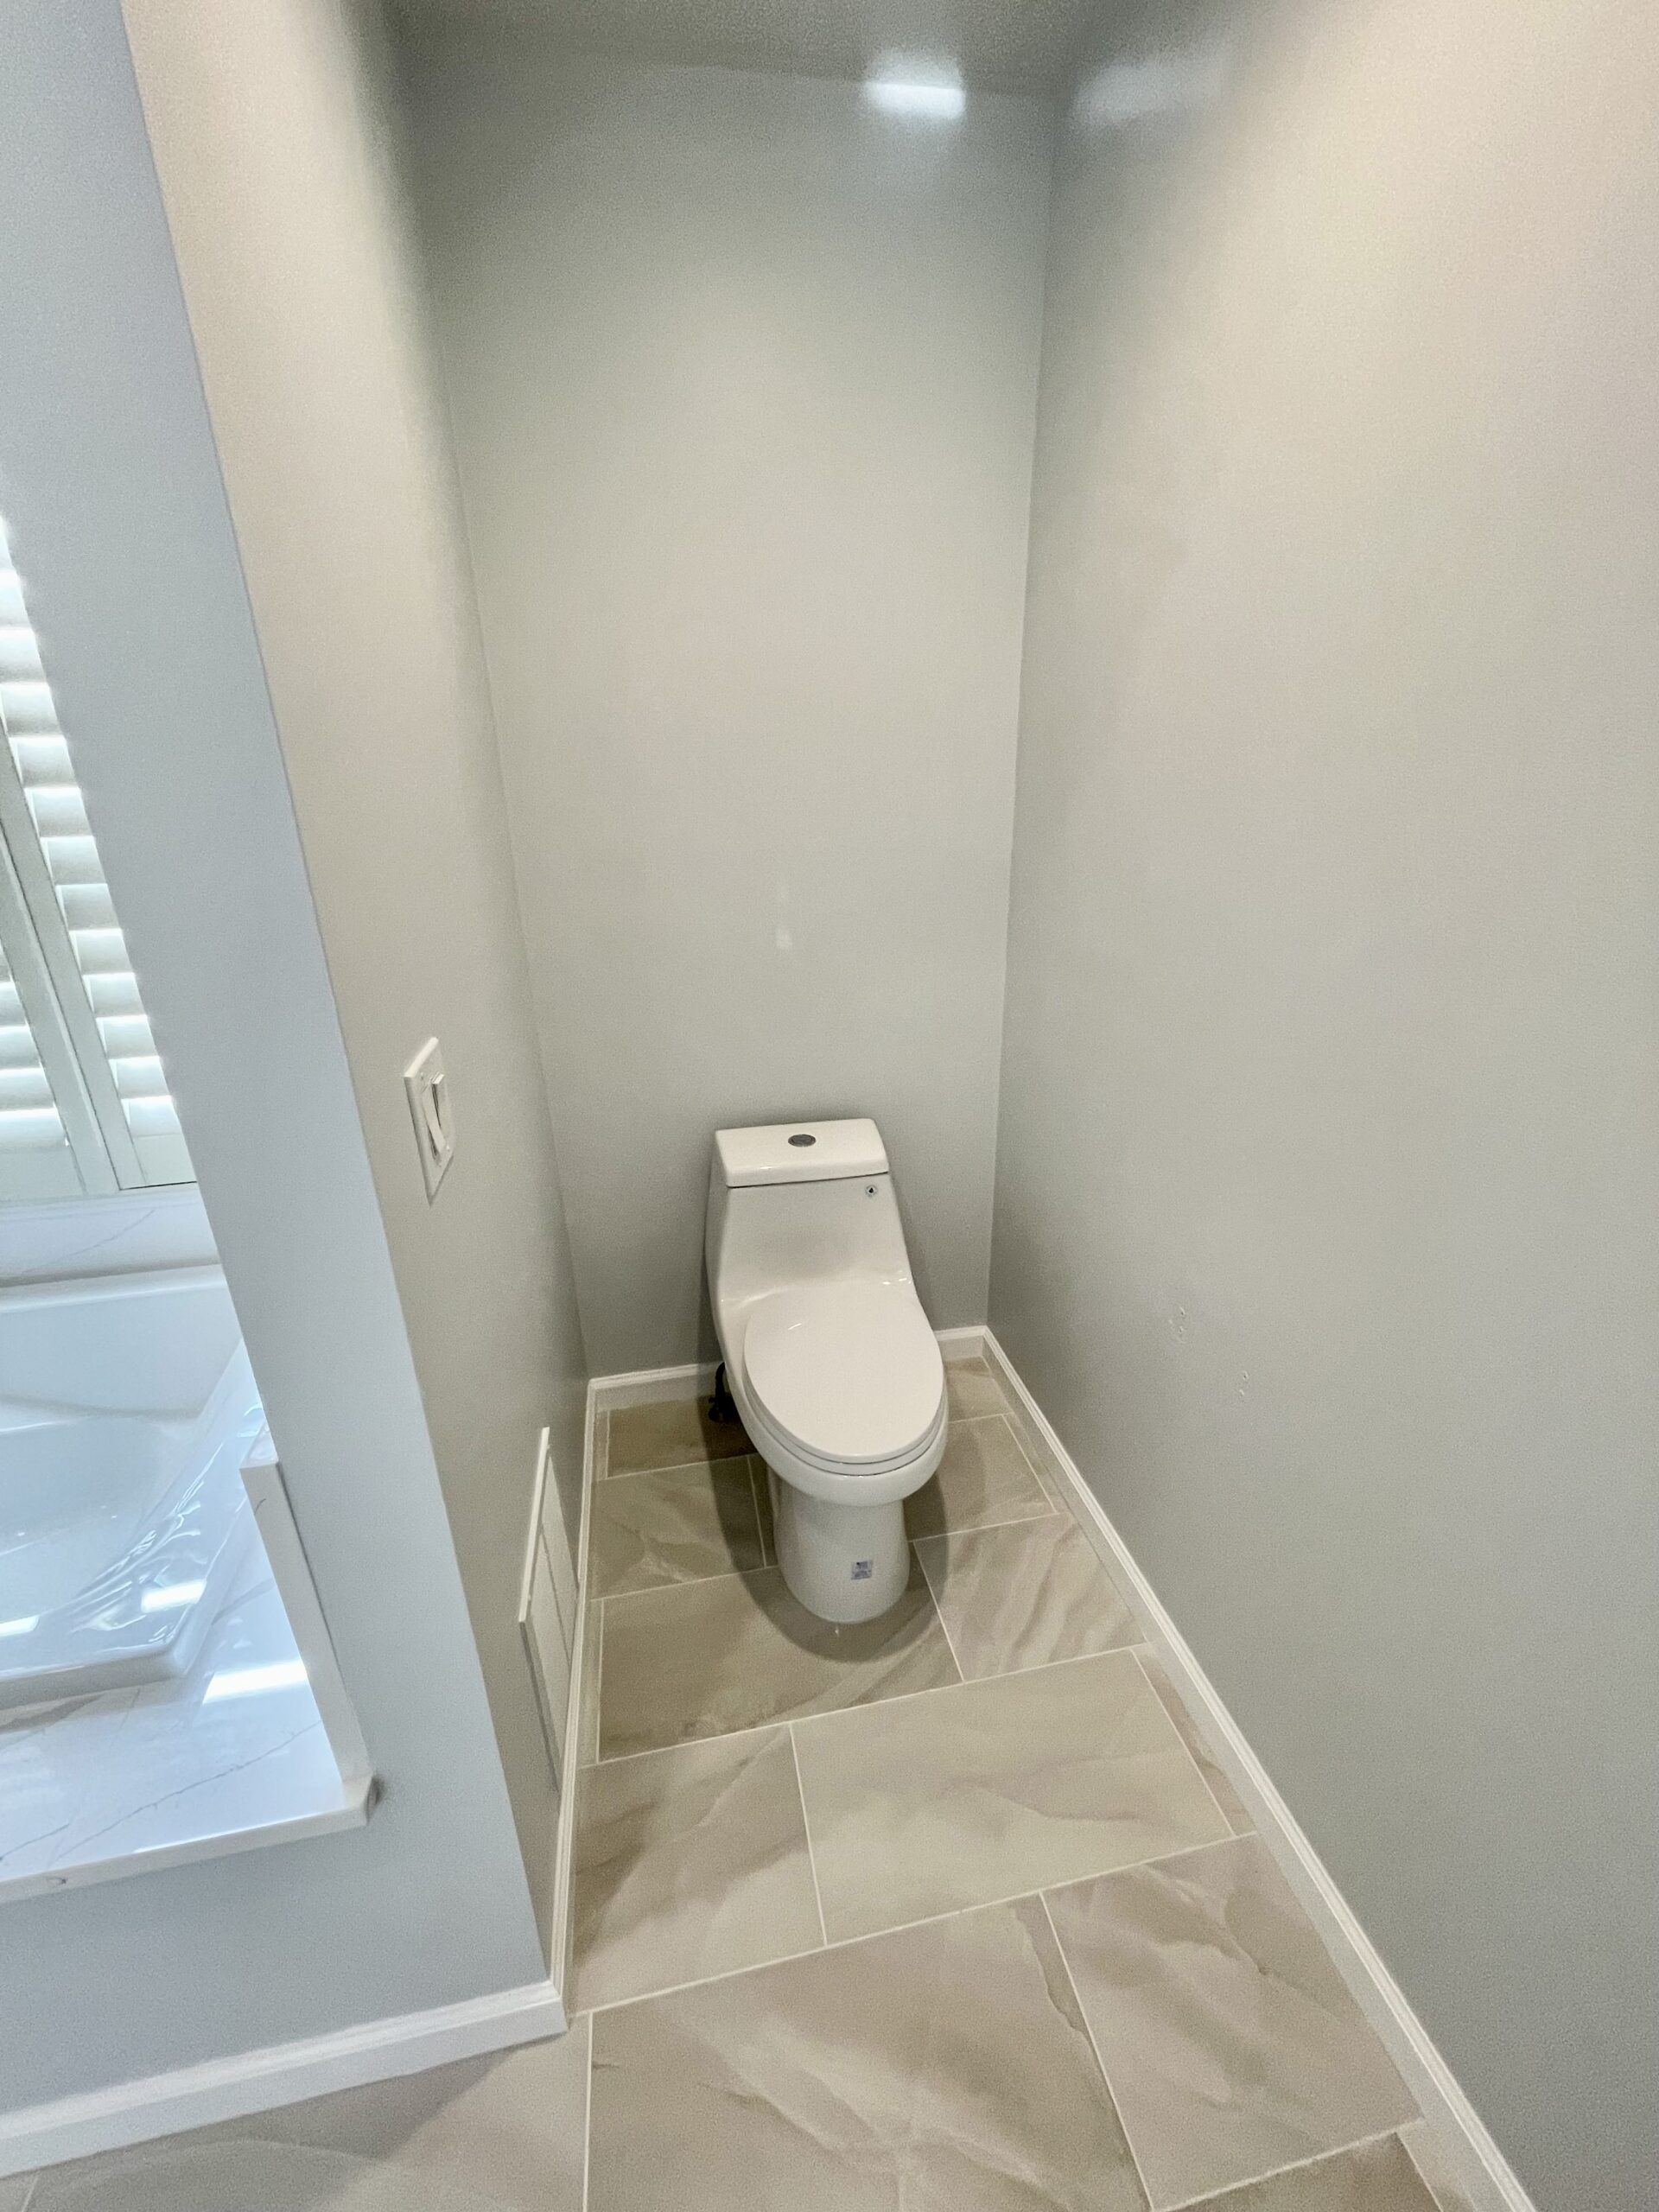 bathroom design showing toilet bowl